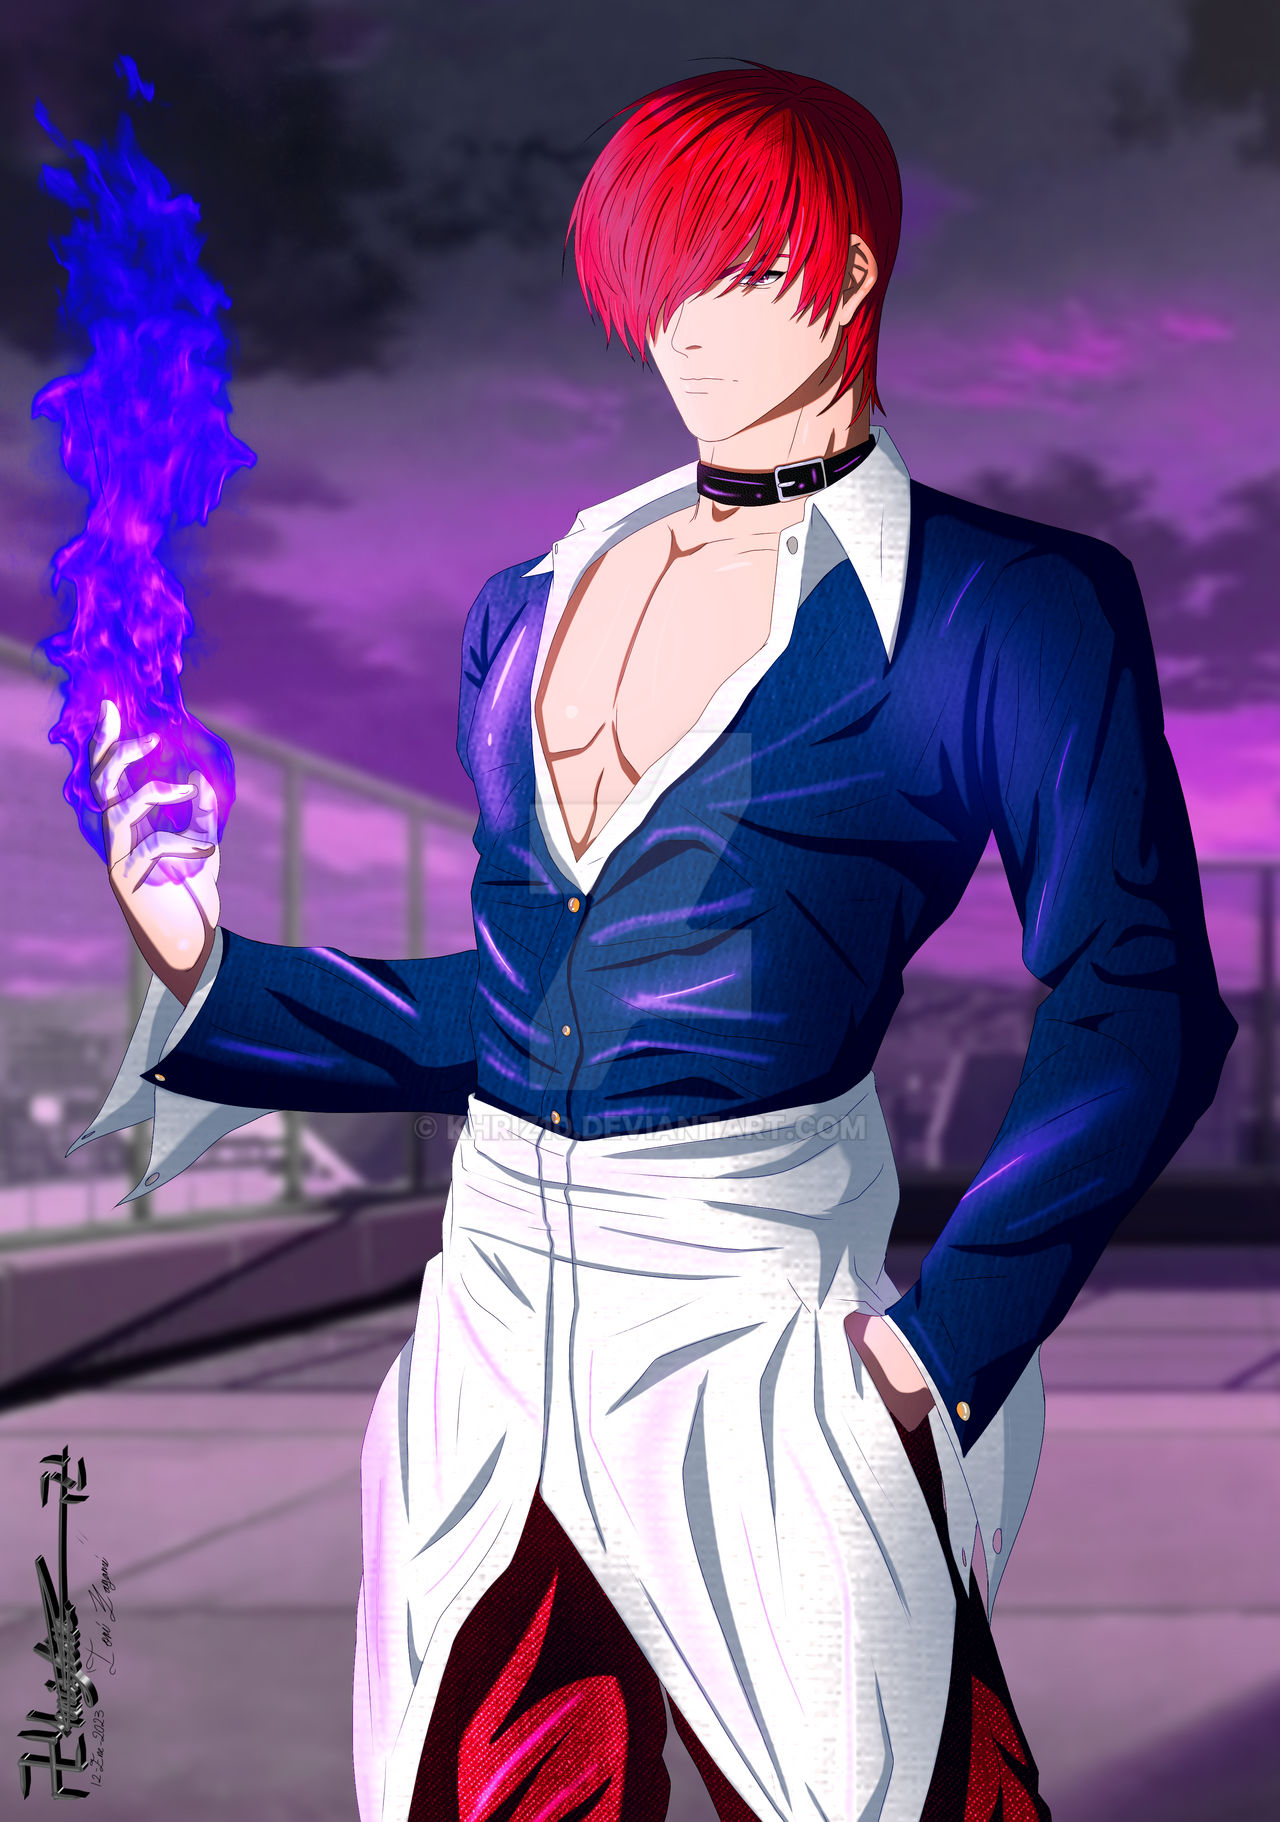 Iori Yagami Anime Manga The King of Fighters, Anime, purple